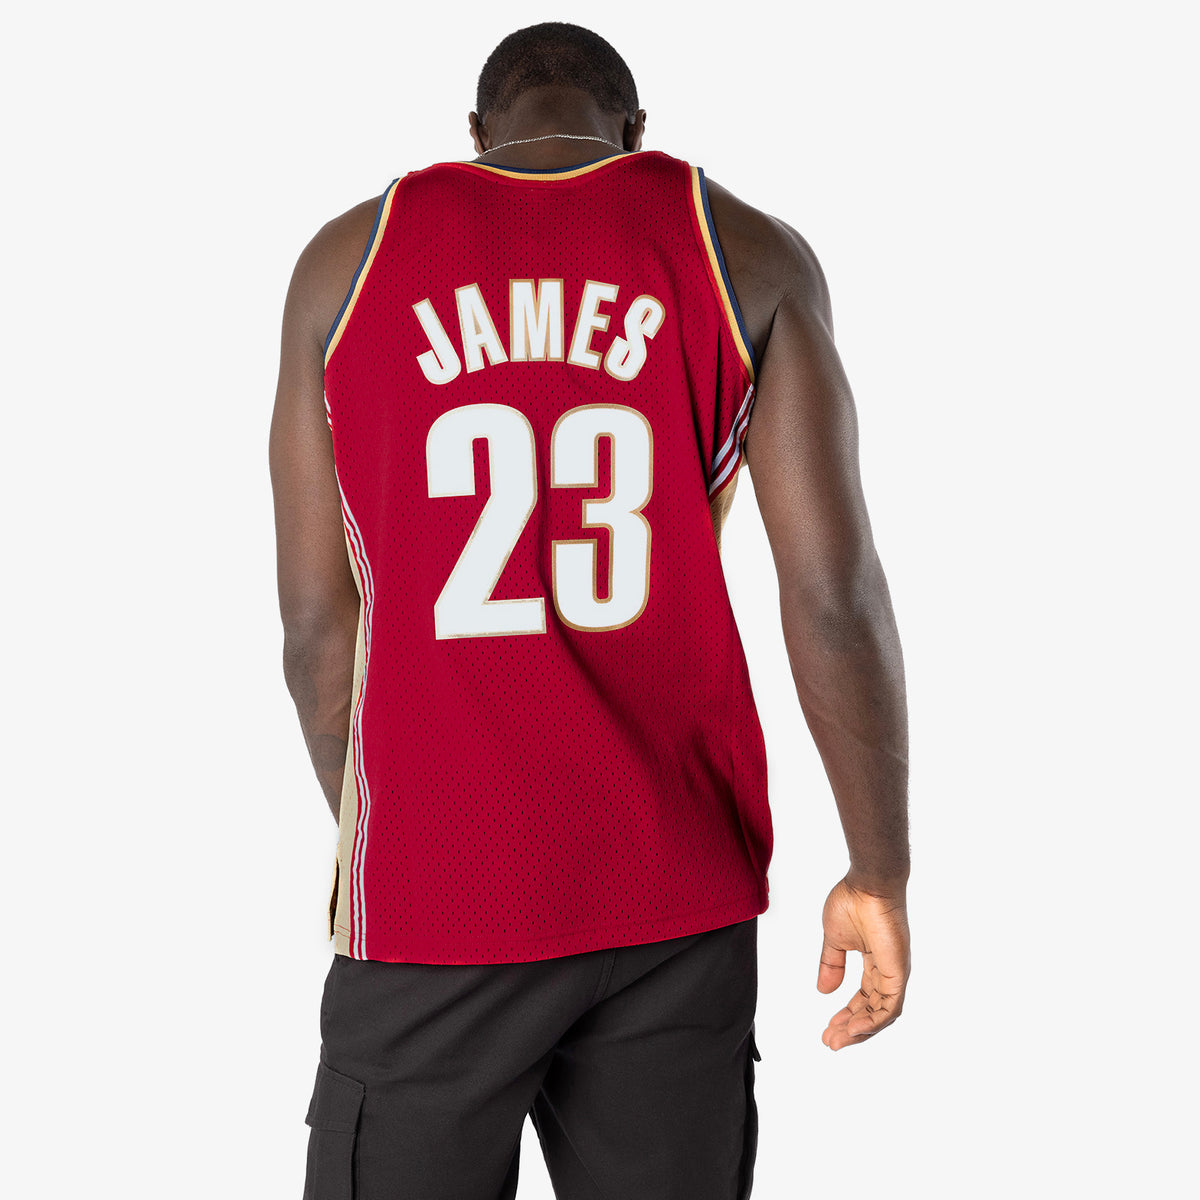 Nike NBA Cleveland Cavaliers LeBron James Youth Swingman Jersey